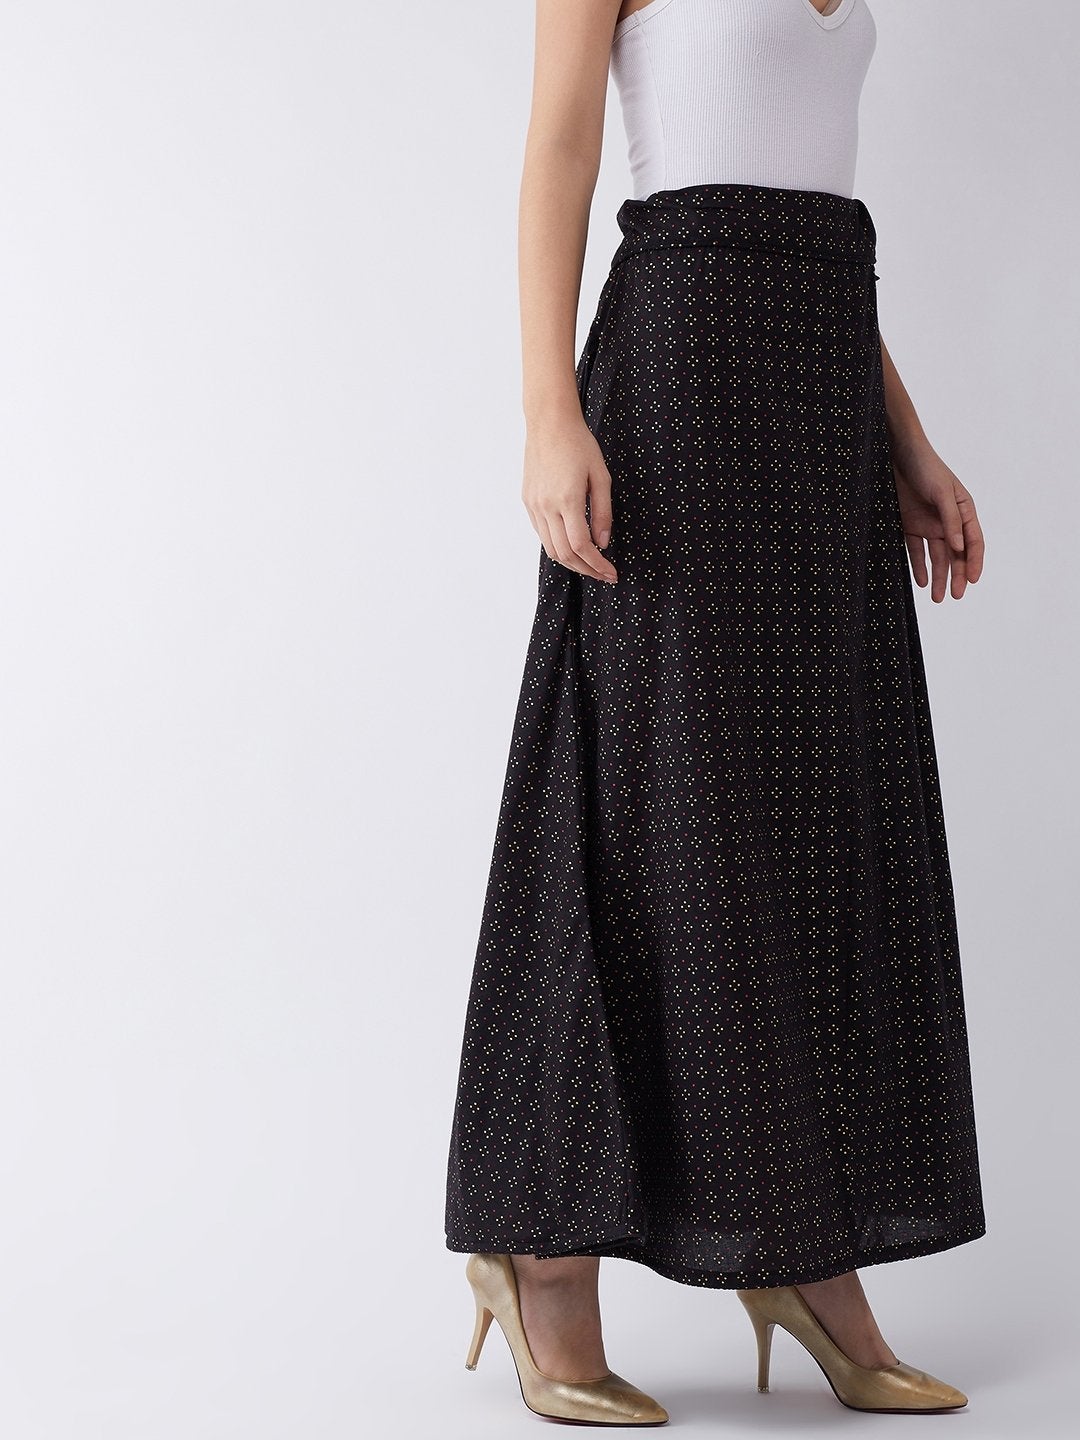 Women's Black Gold Pin Dot Skirt - InWeave